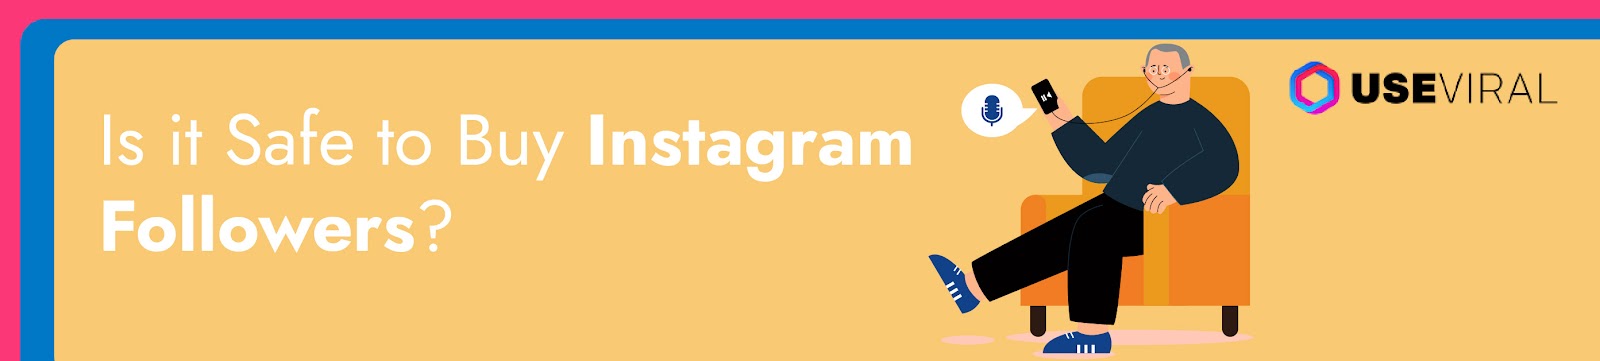 Is it Safe to Buy Instagram Followers?